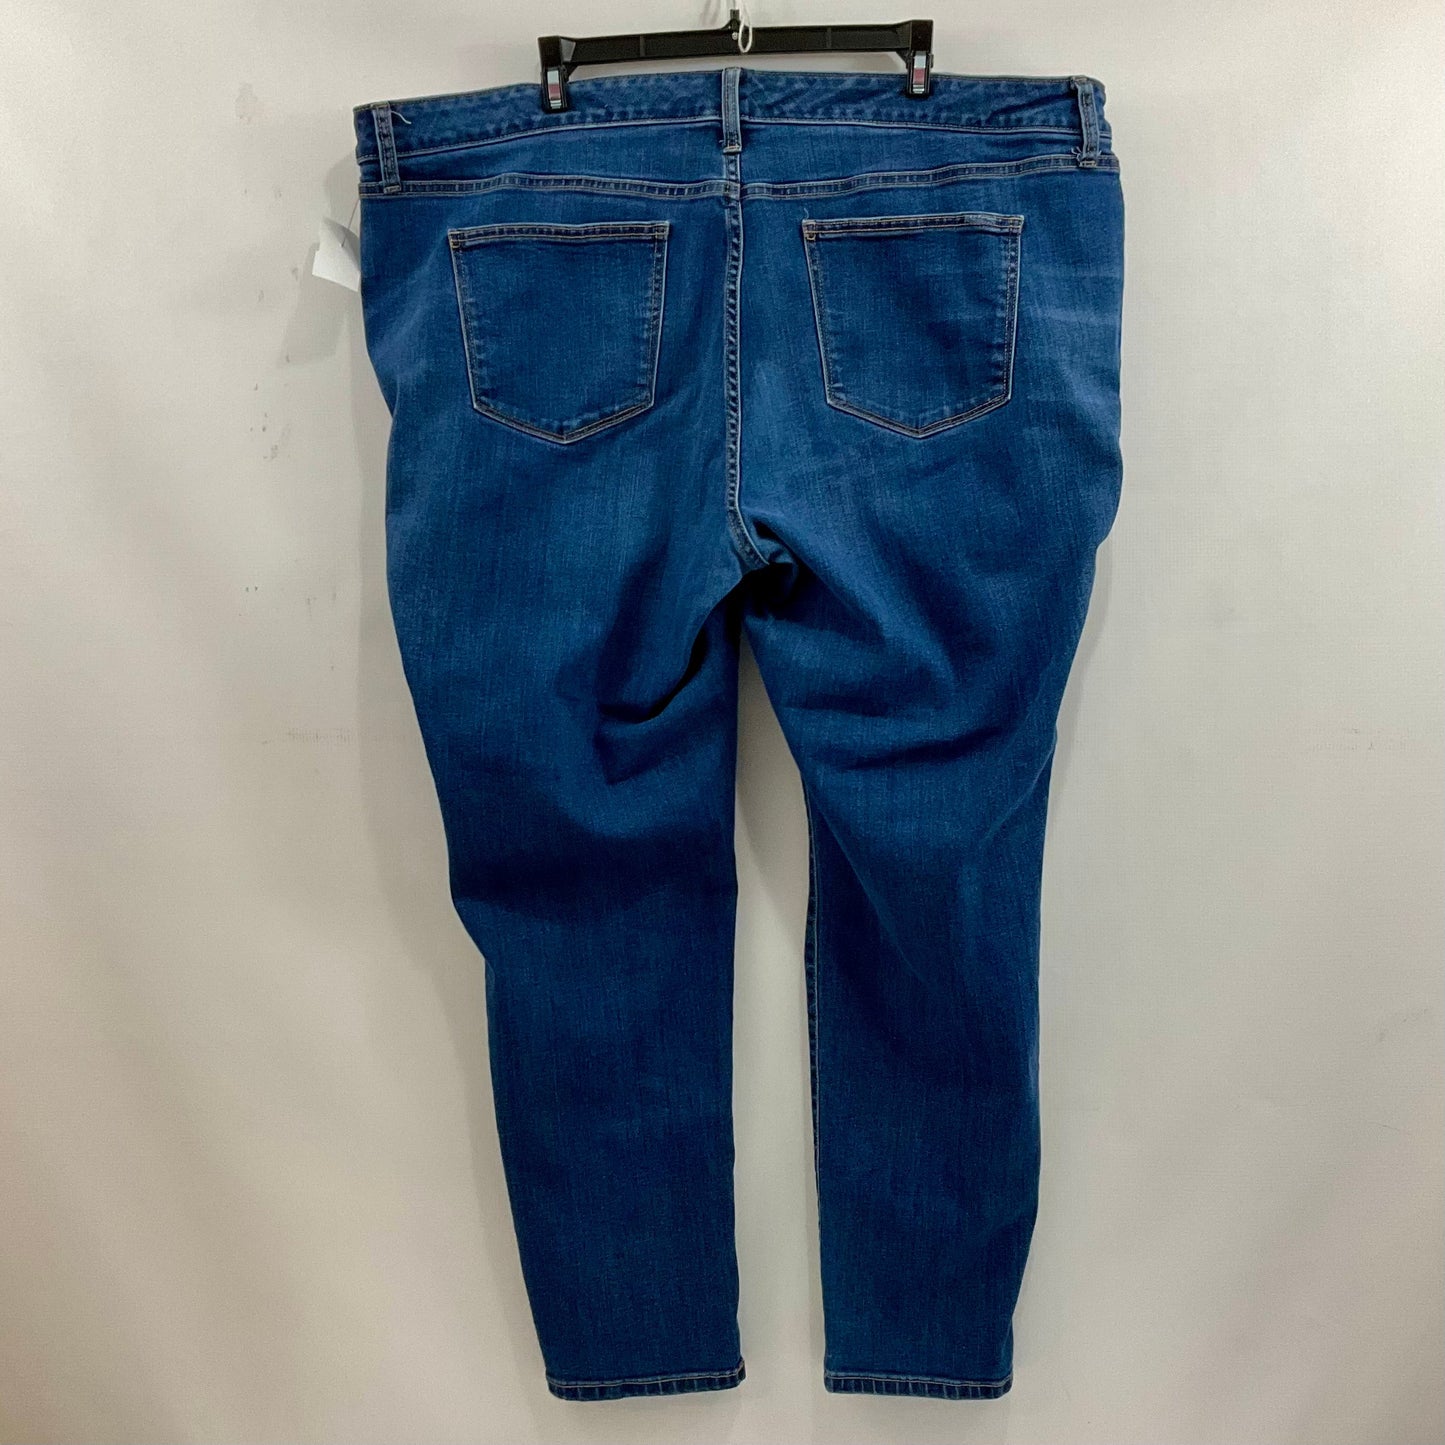 Jeans Skinny By St Johns Bay  Size: 22